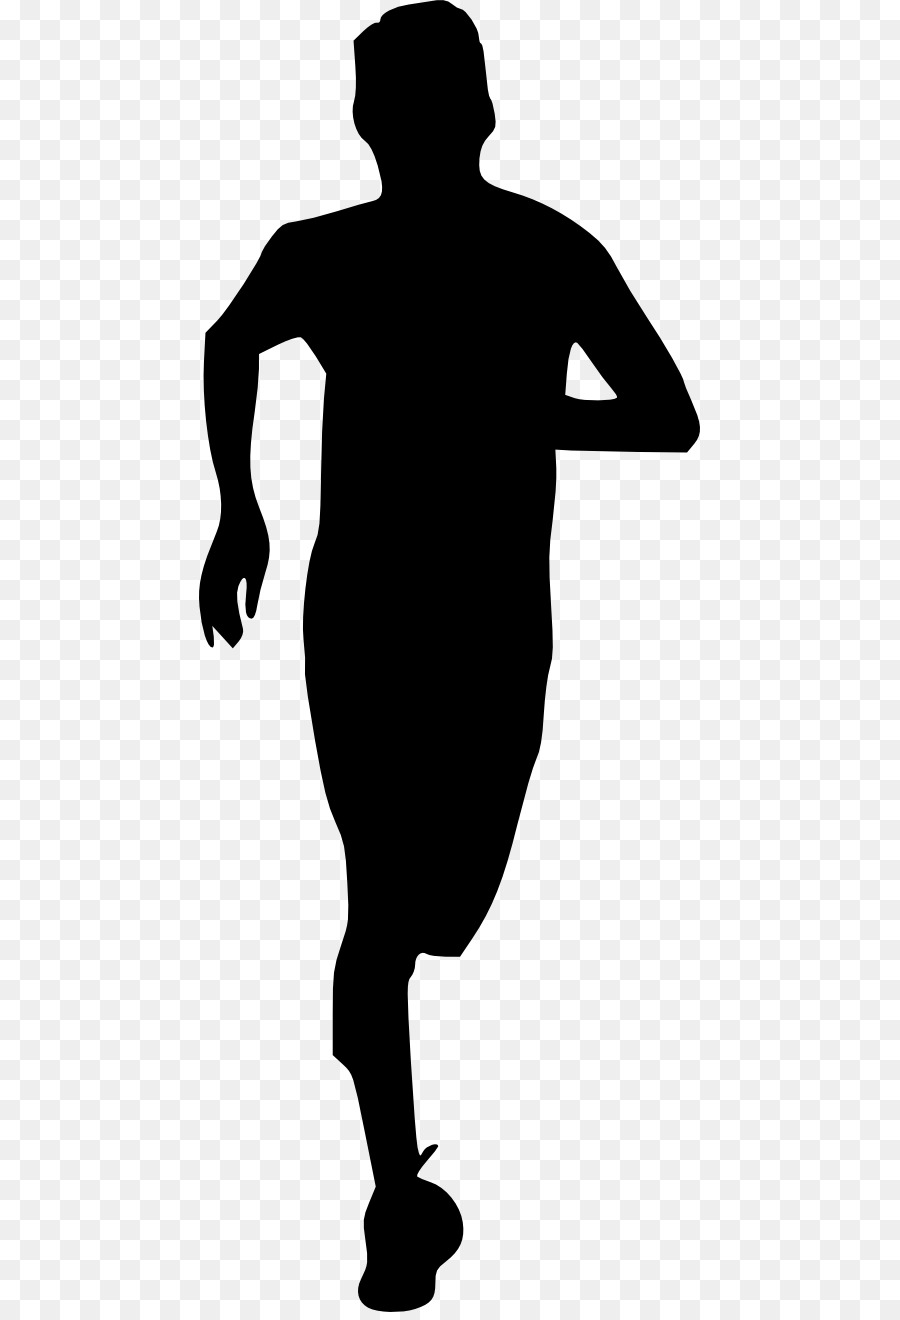 Free Silhouette Man Running, Download Free Silhouette Man Running png